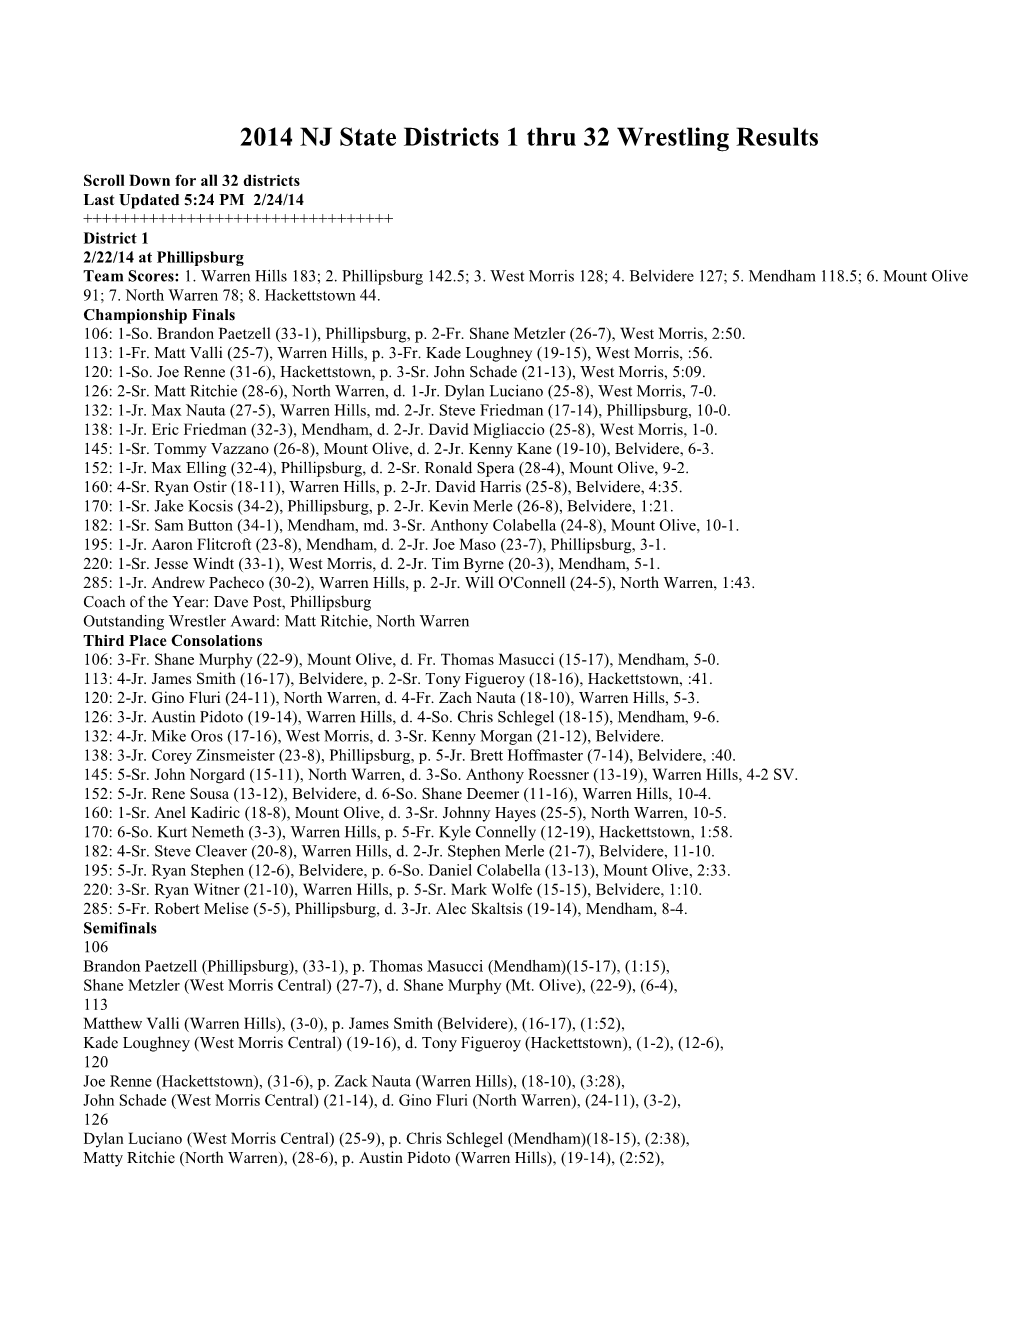 2014 NJ State Districts 1 Thru 32 Wrestling Results